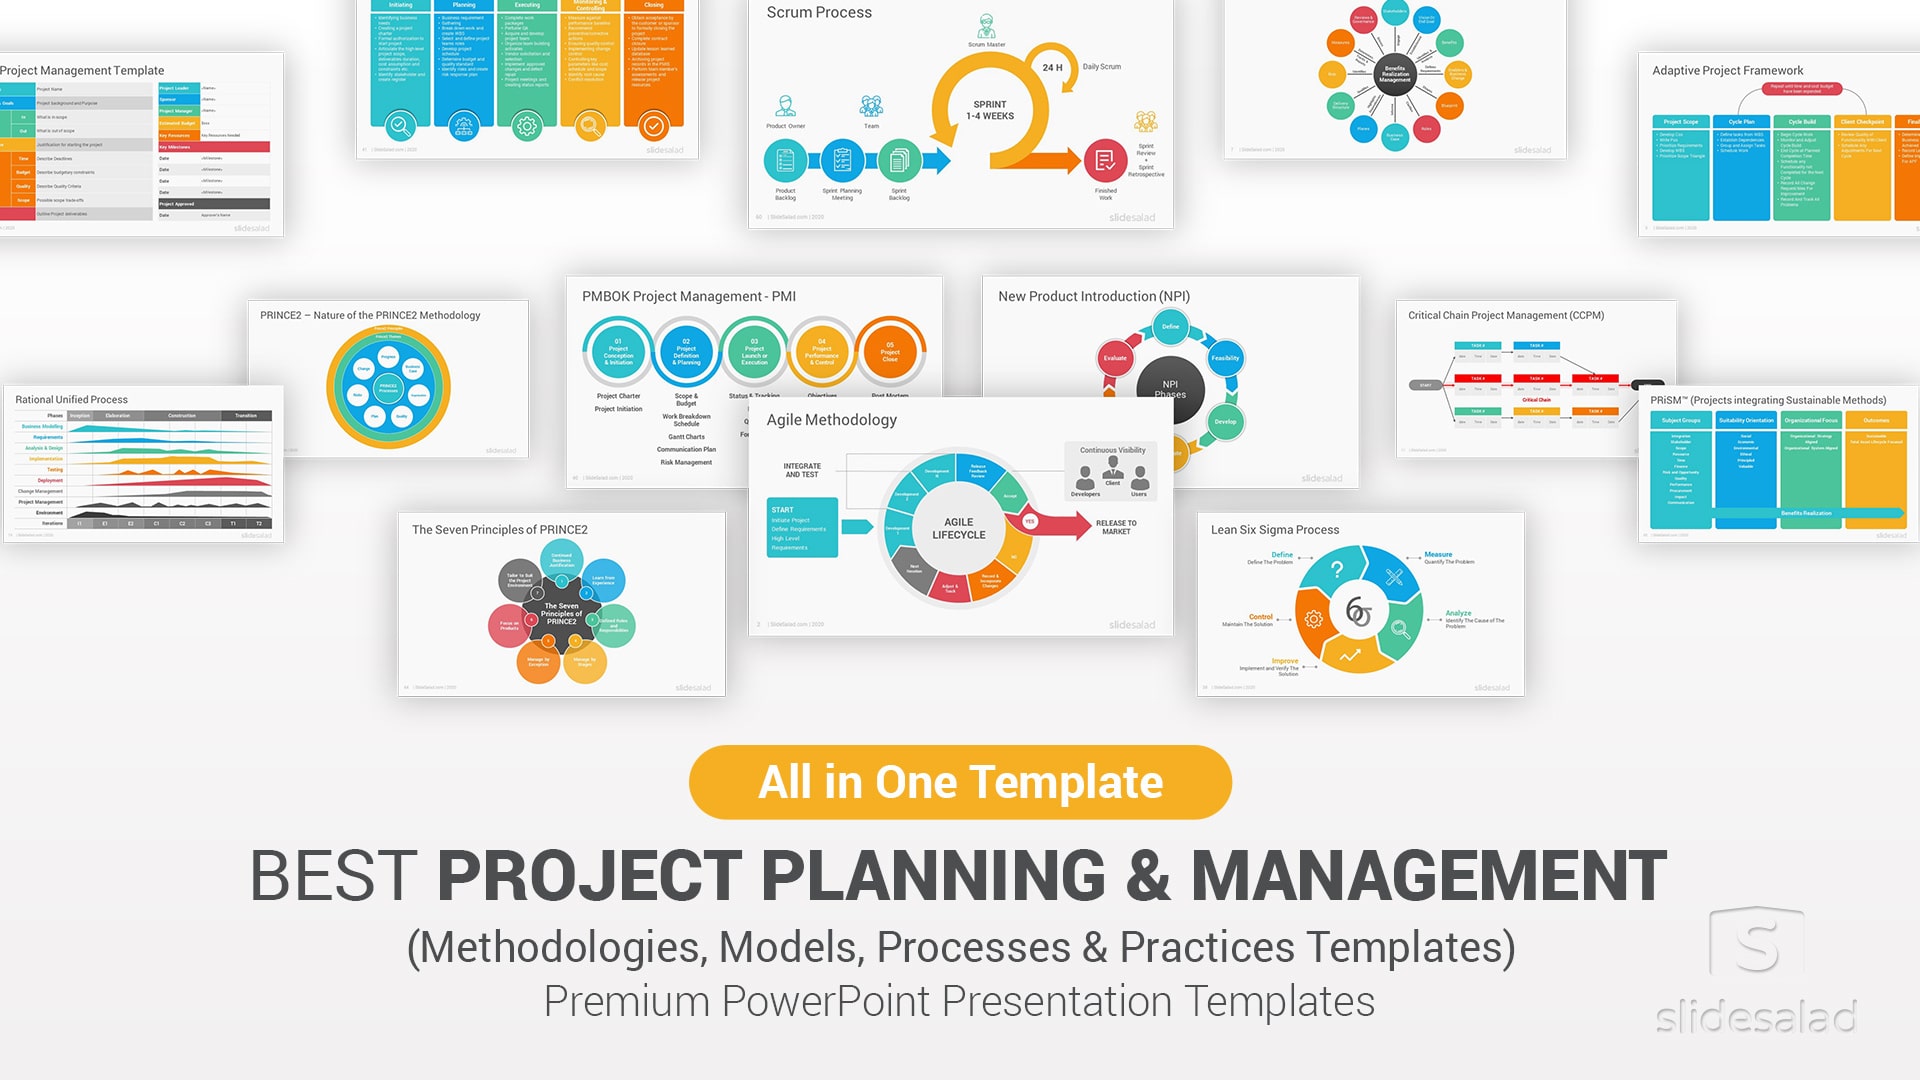 Project Management Methodologies Processes Models PowerPoint Templates Presentations